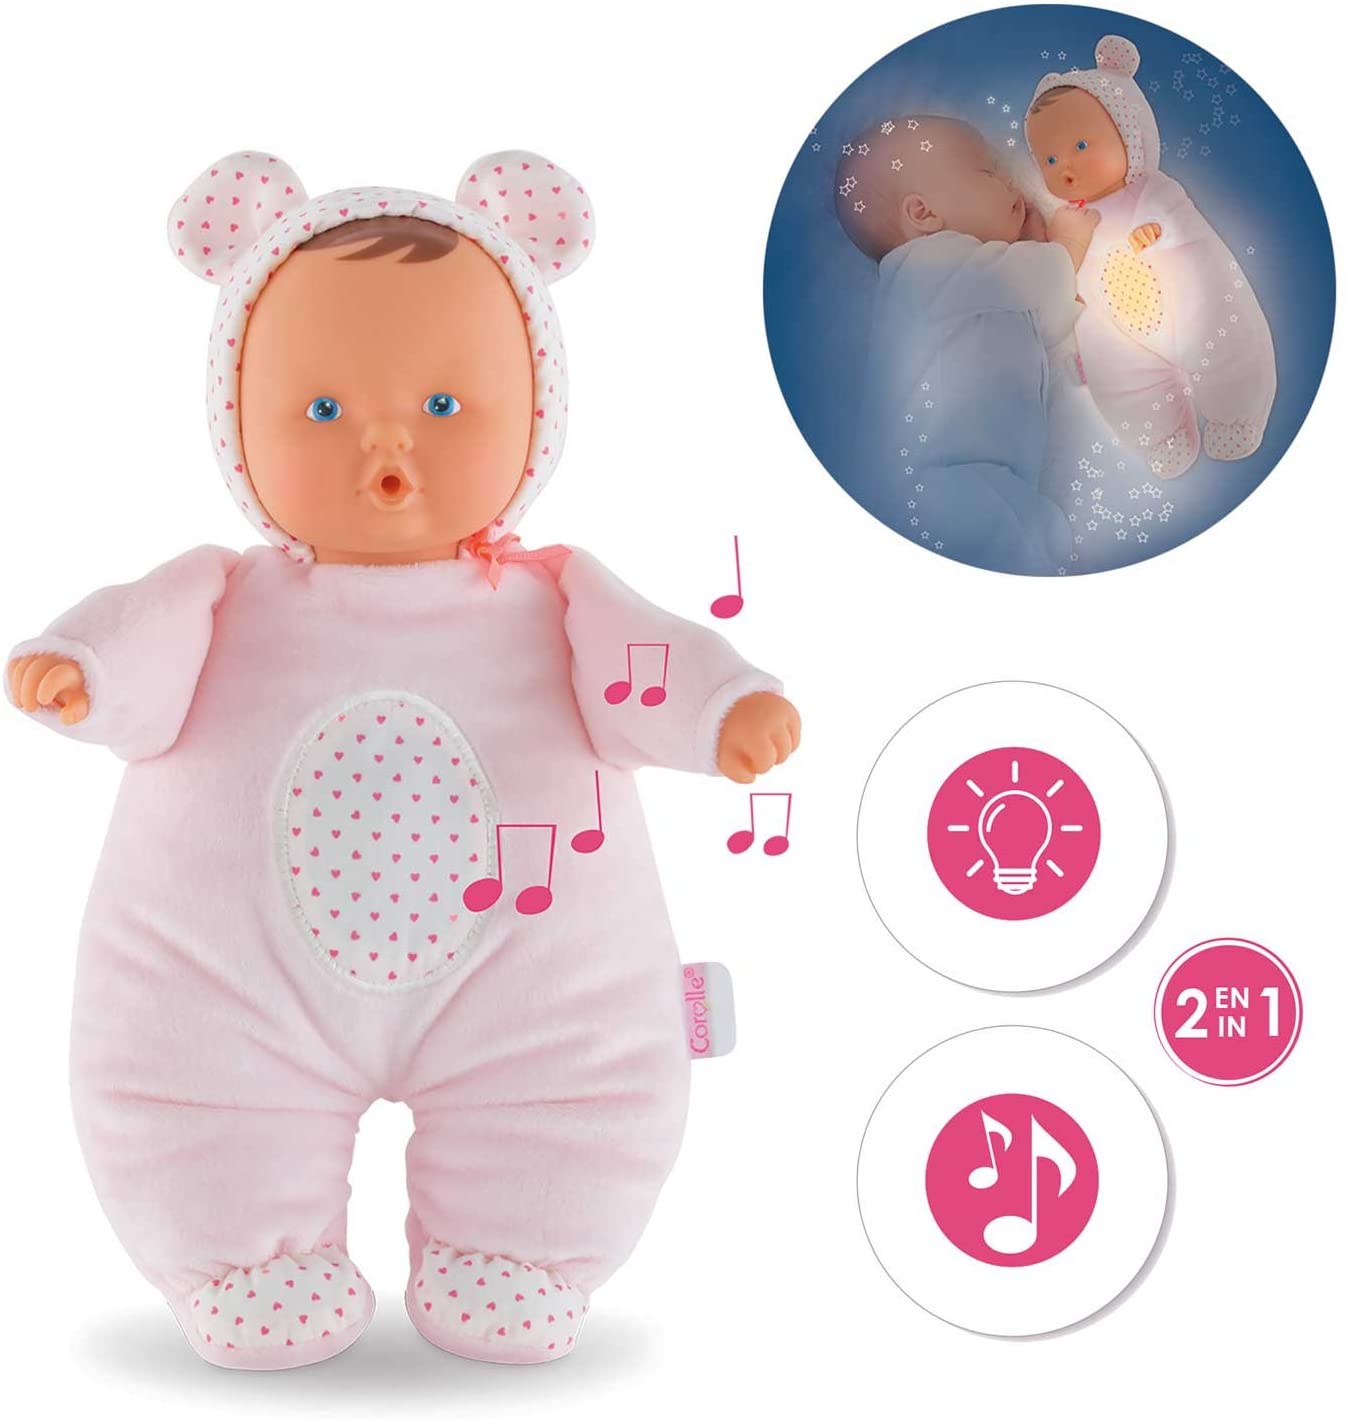 Corolle Mon Doudou Babibear 2-in-1 Musical Baby Doll & Nightlight